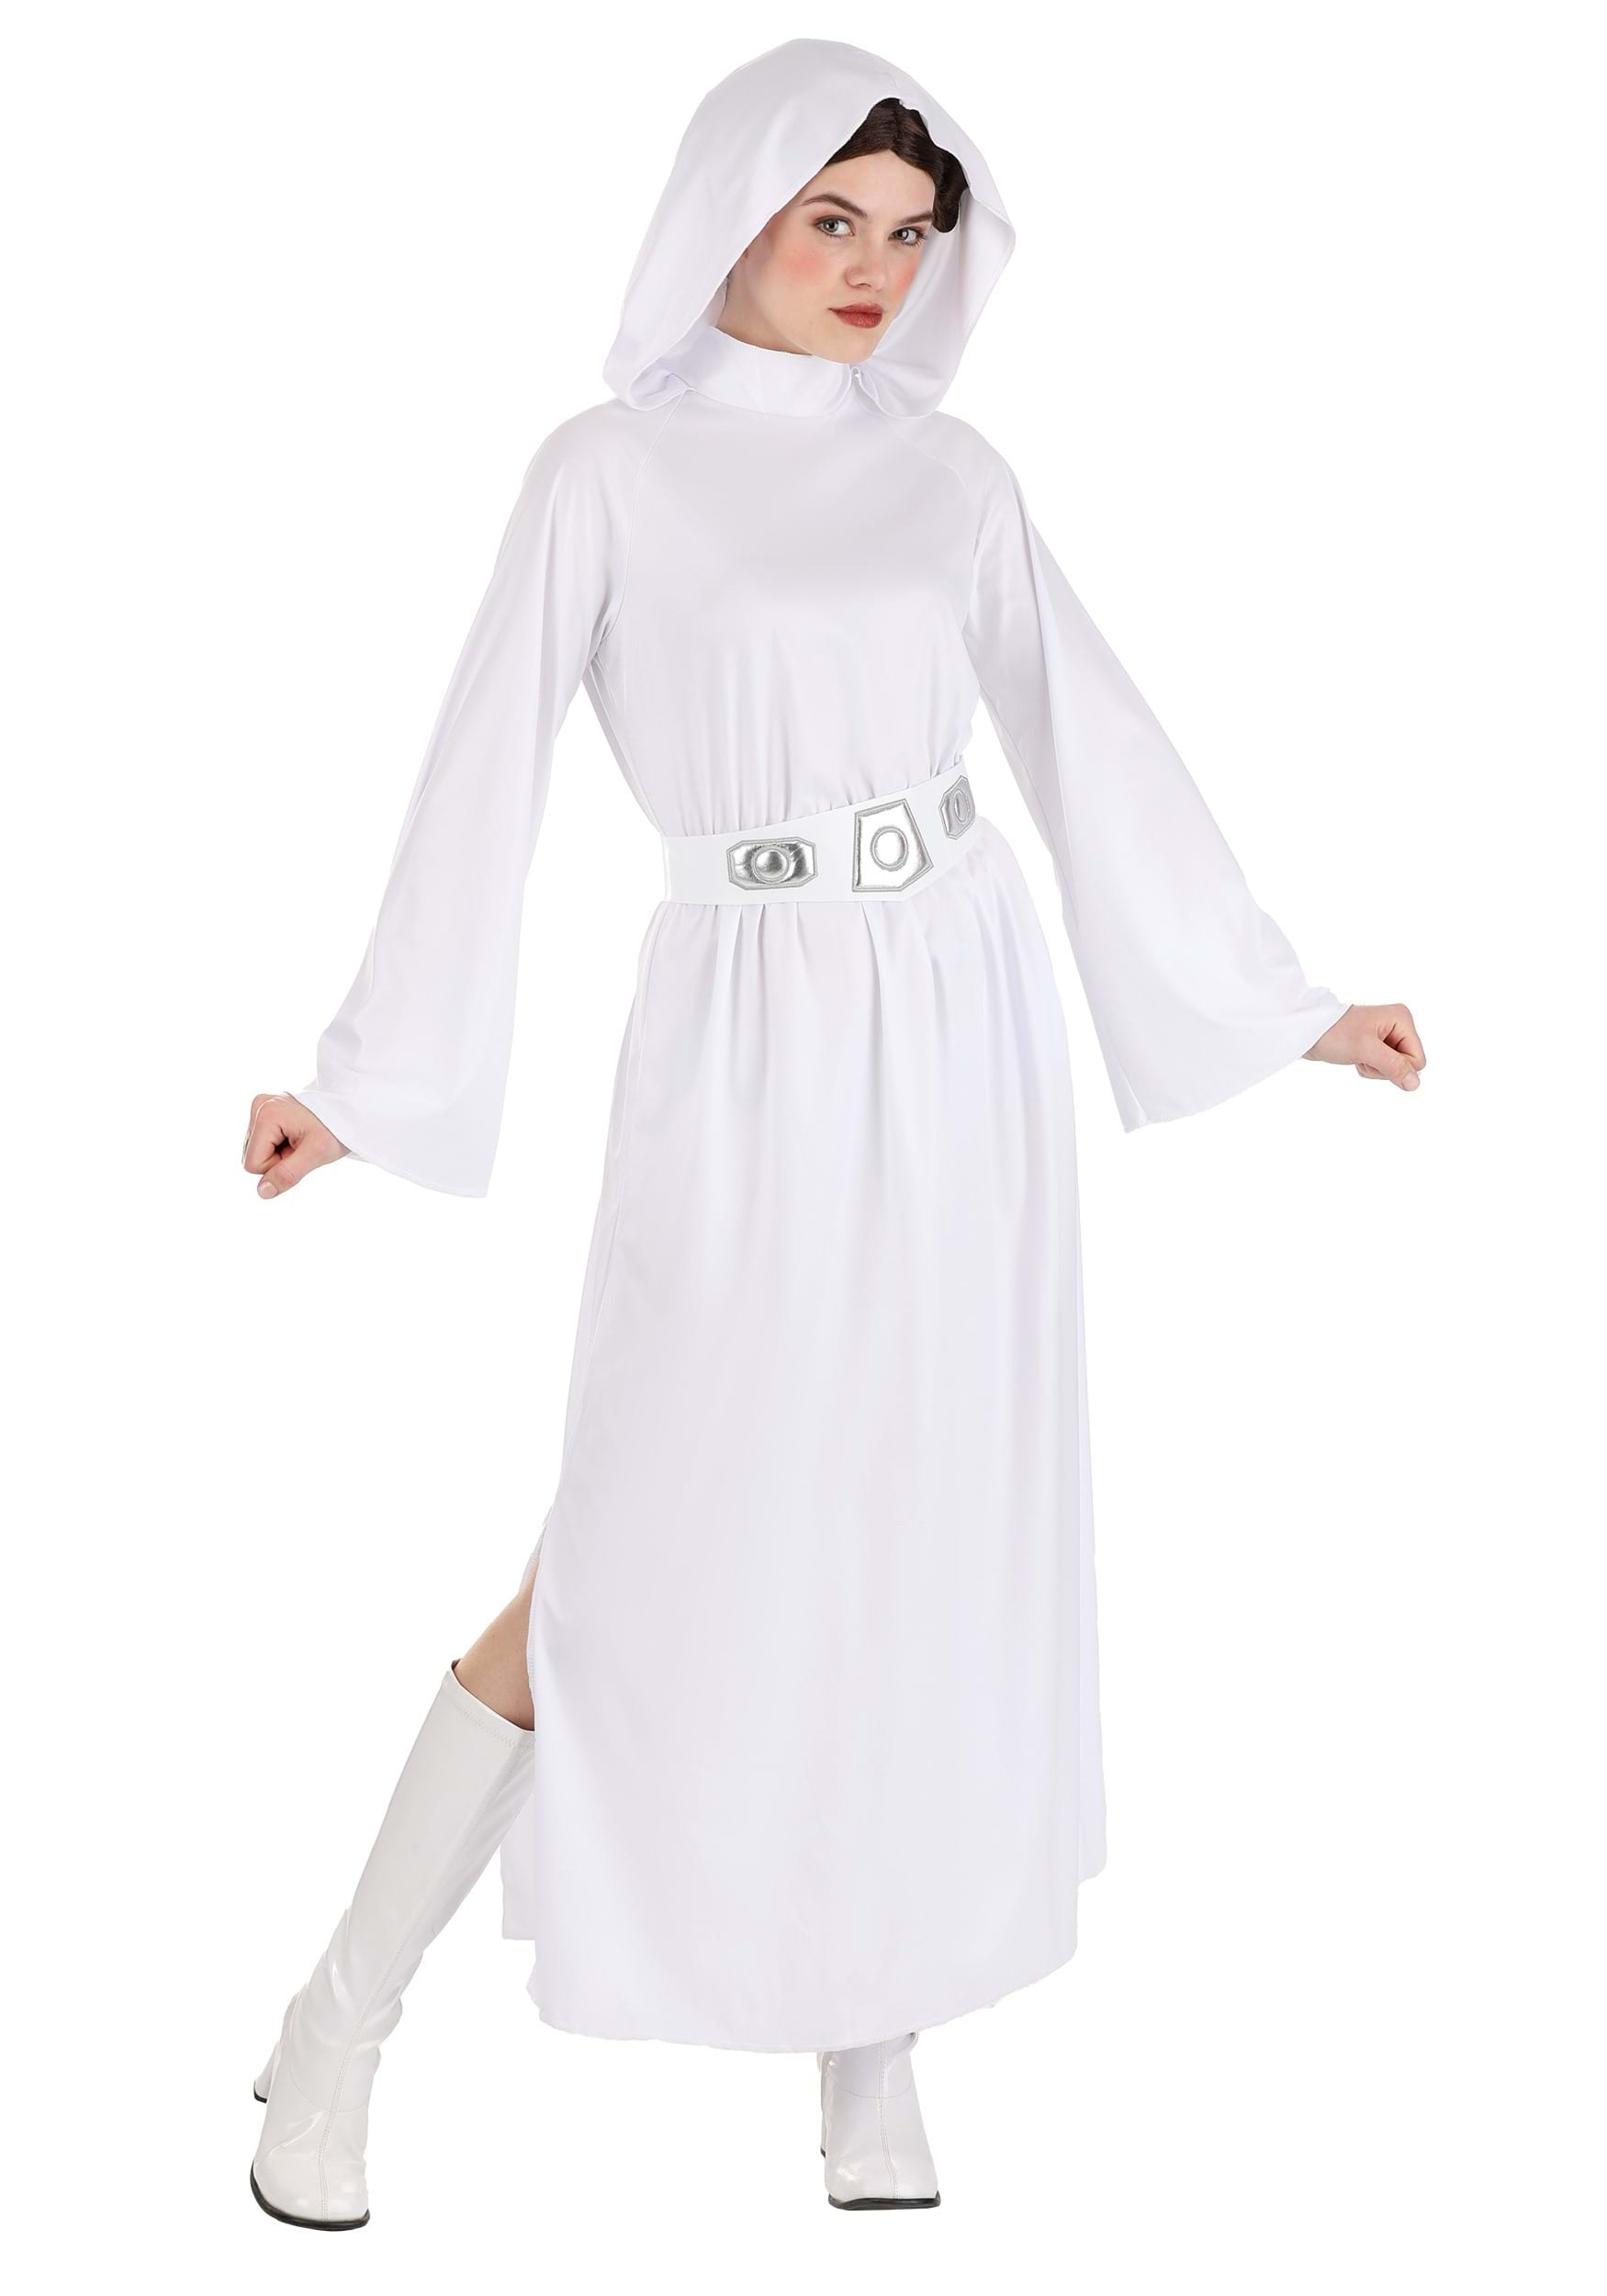 Photos - Fancy Dress Jazwares Princess Leia Hooded Costume for Adults White JWC1020 